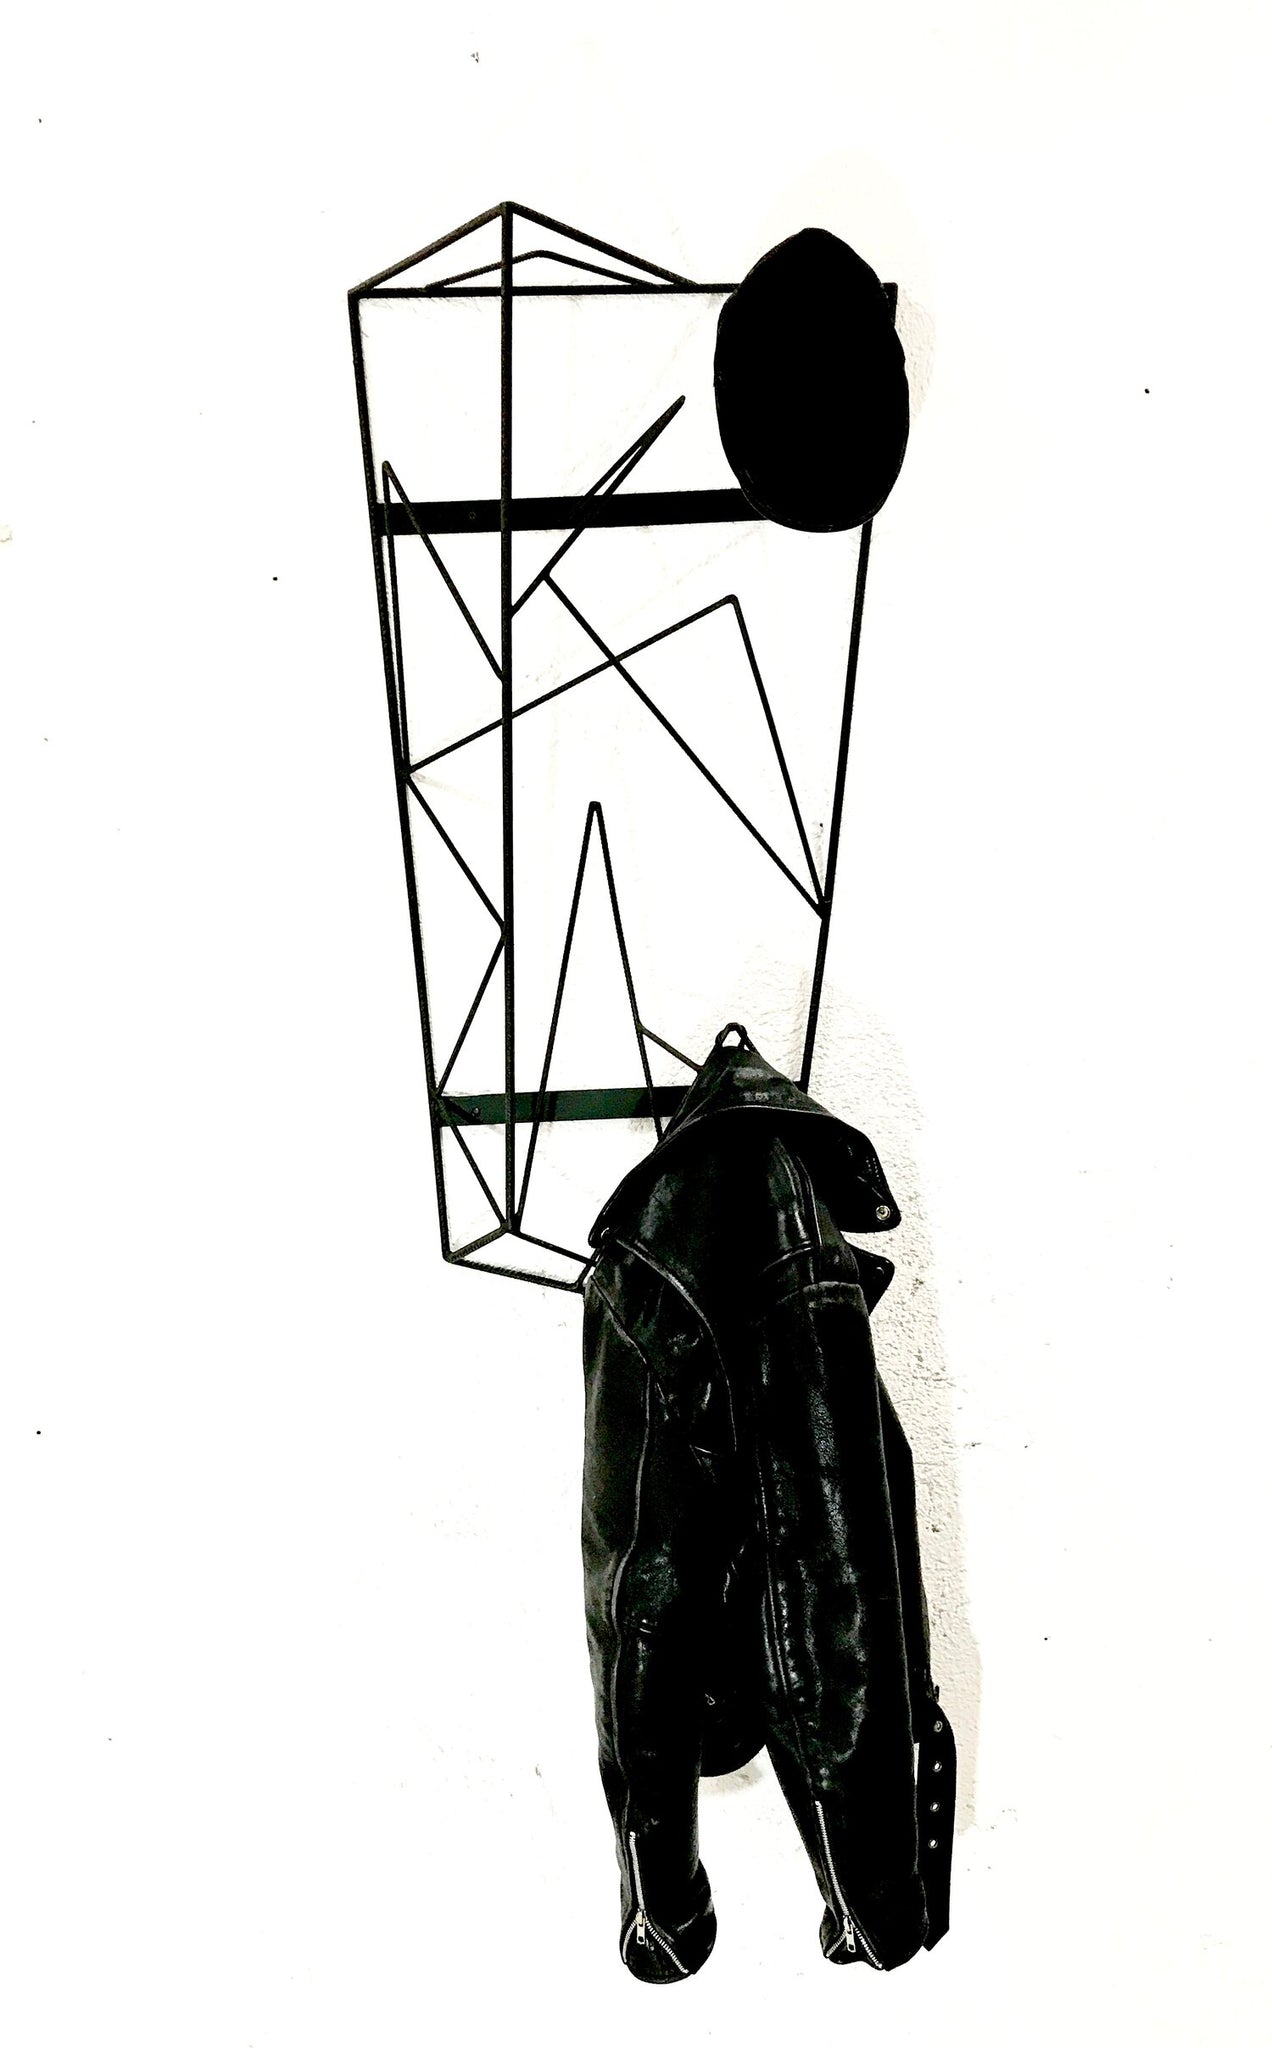 Sculptural hanger with top platform